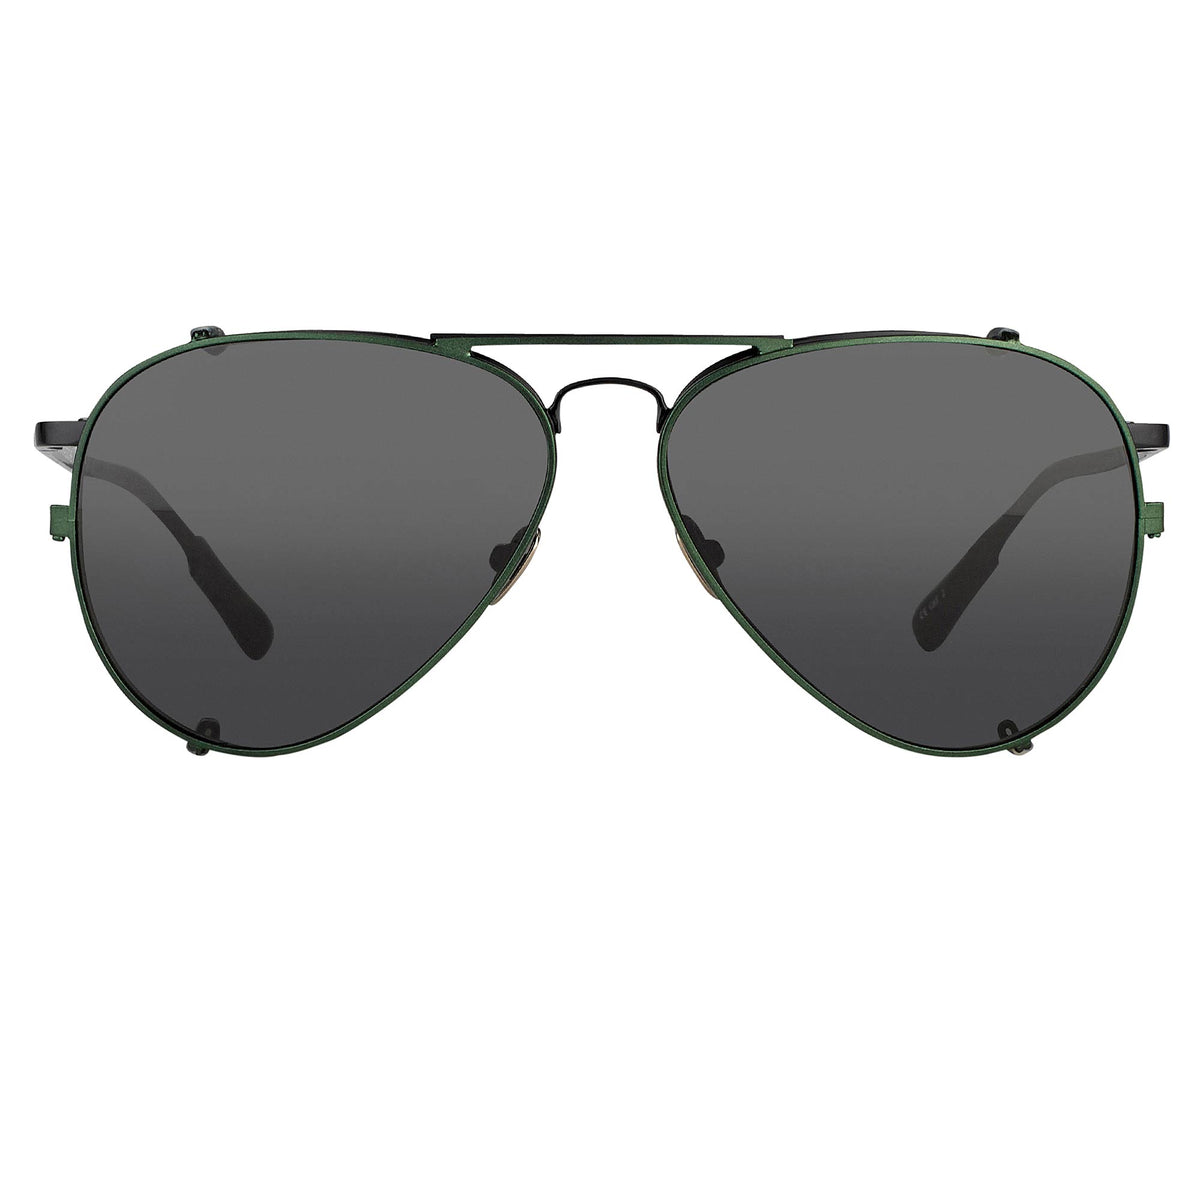 Designer Mirrored Sunglasses for Men - Up to 79% off